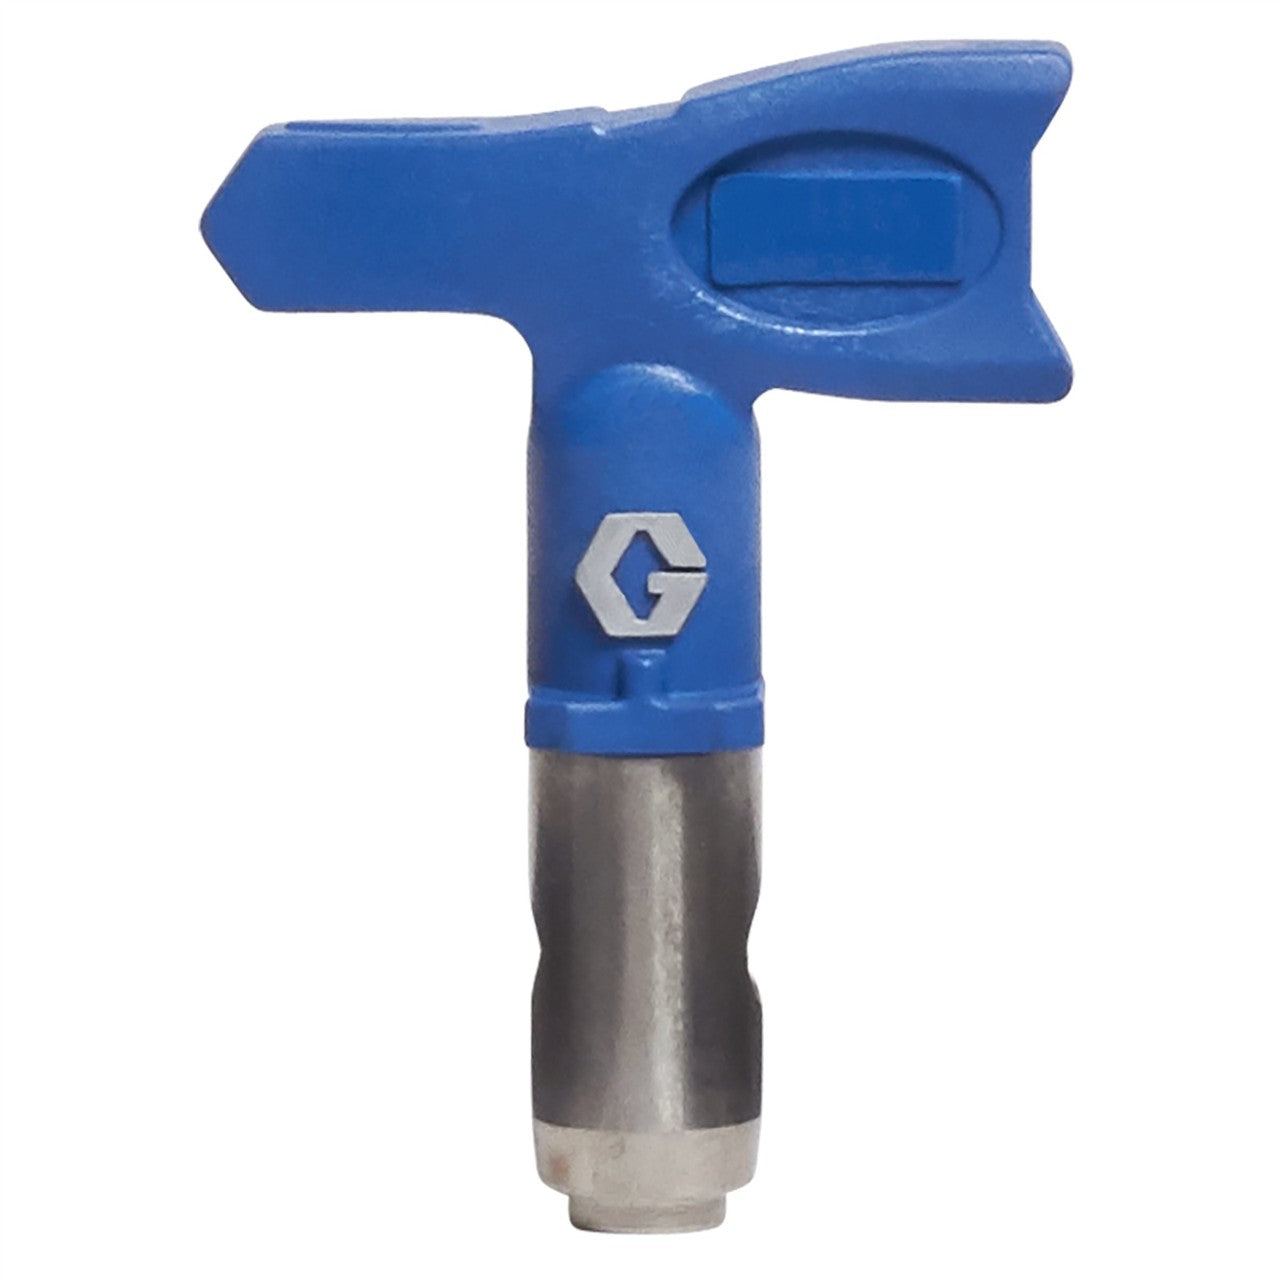 RAC X Professional Airless Spray Tip (Blue)